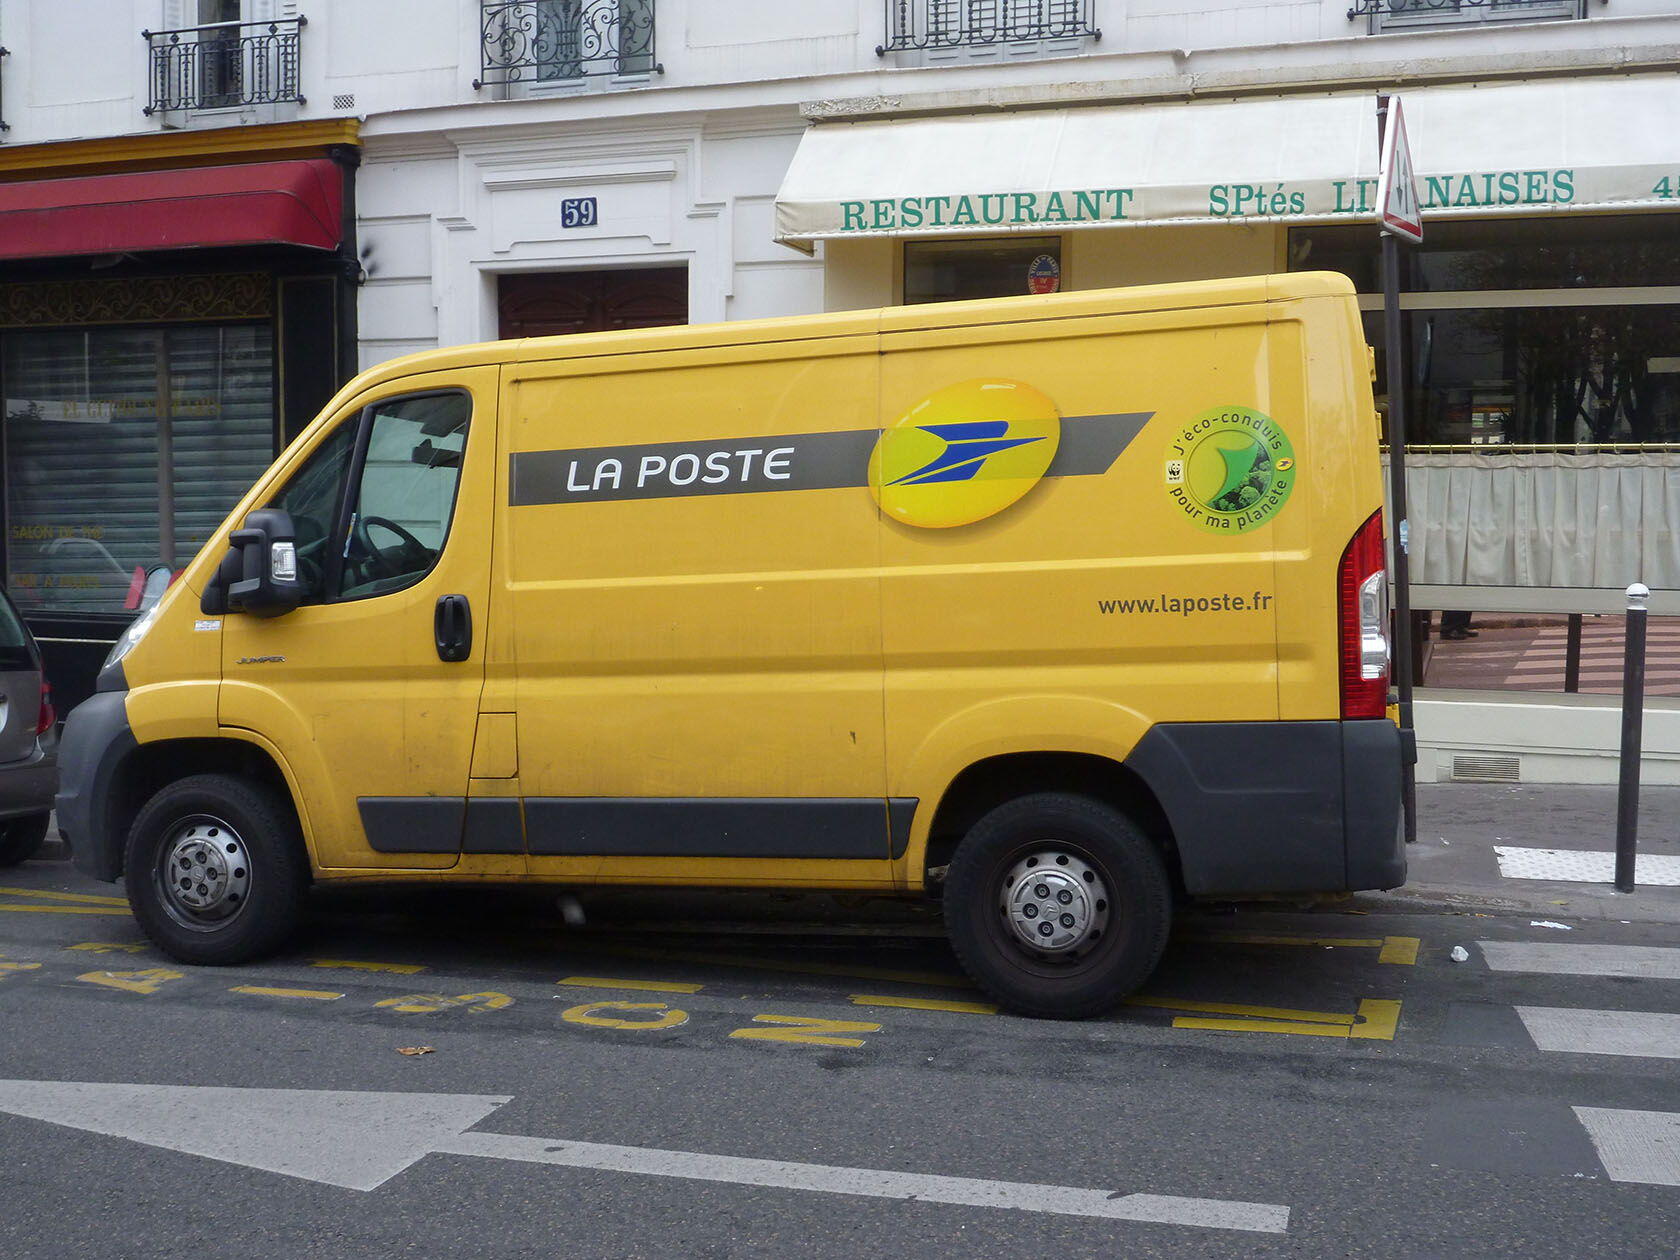 La Poste (France) - Wikipedia